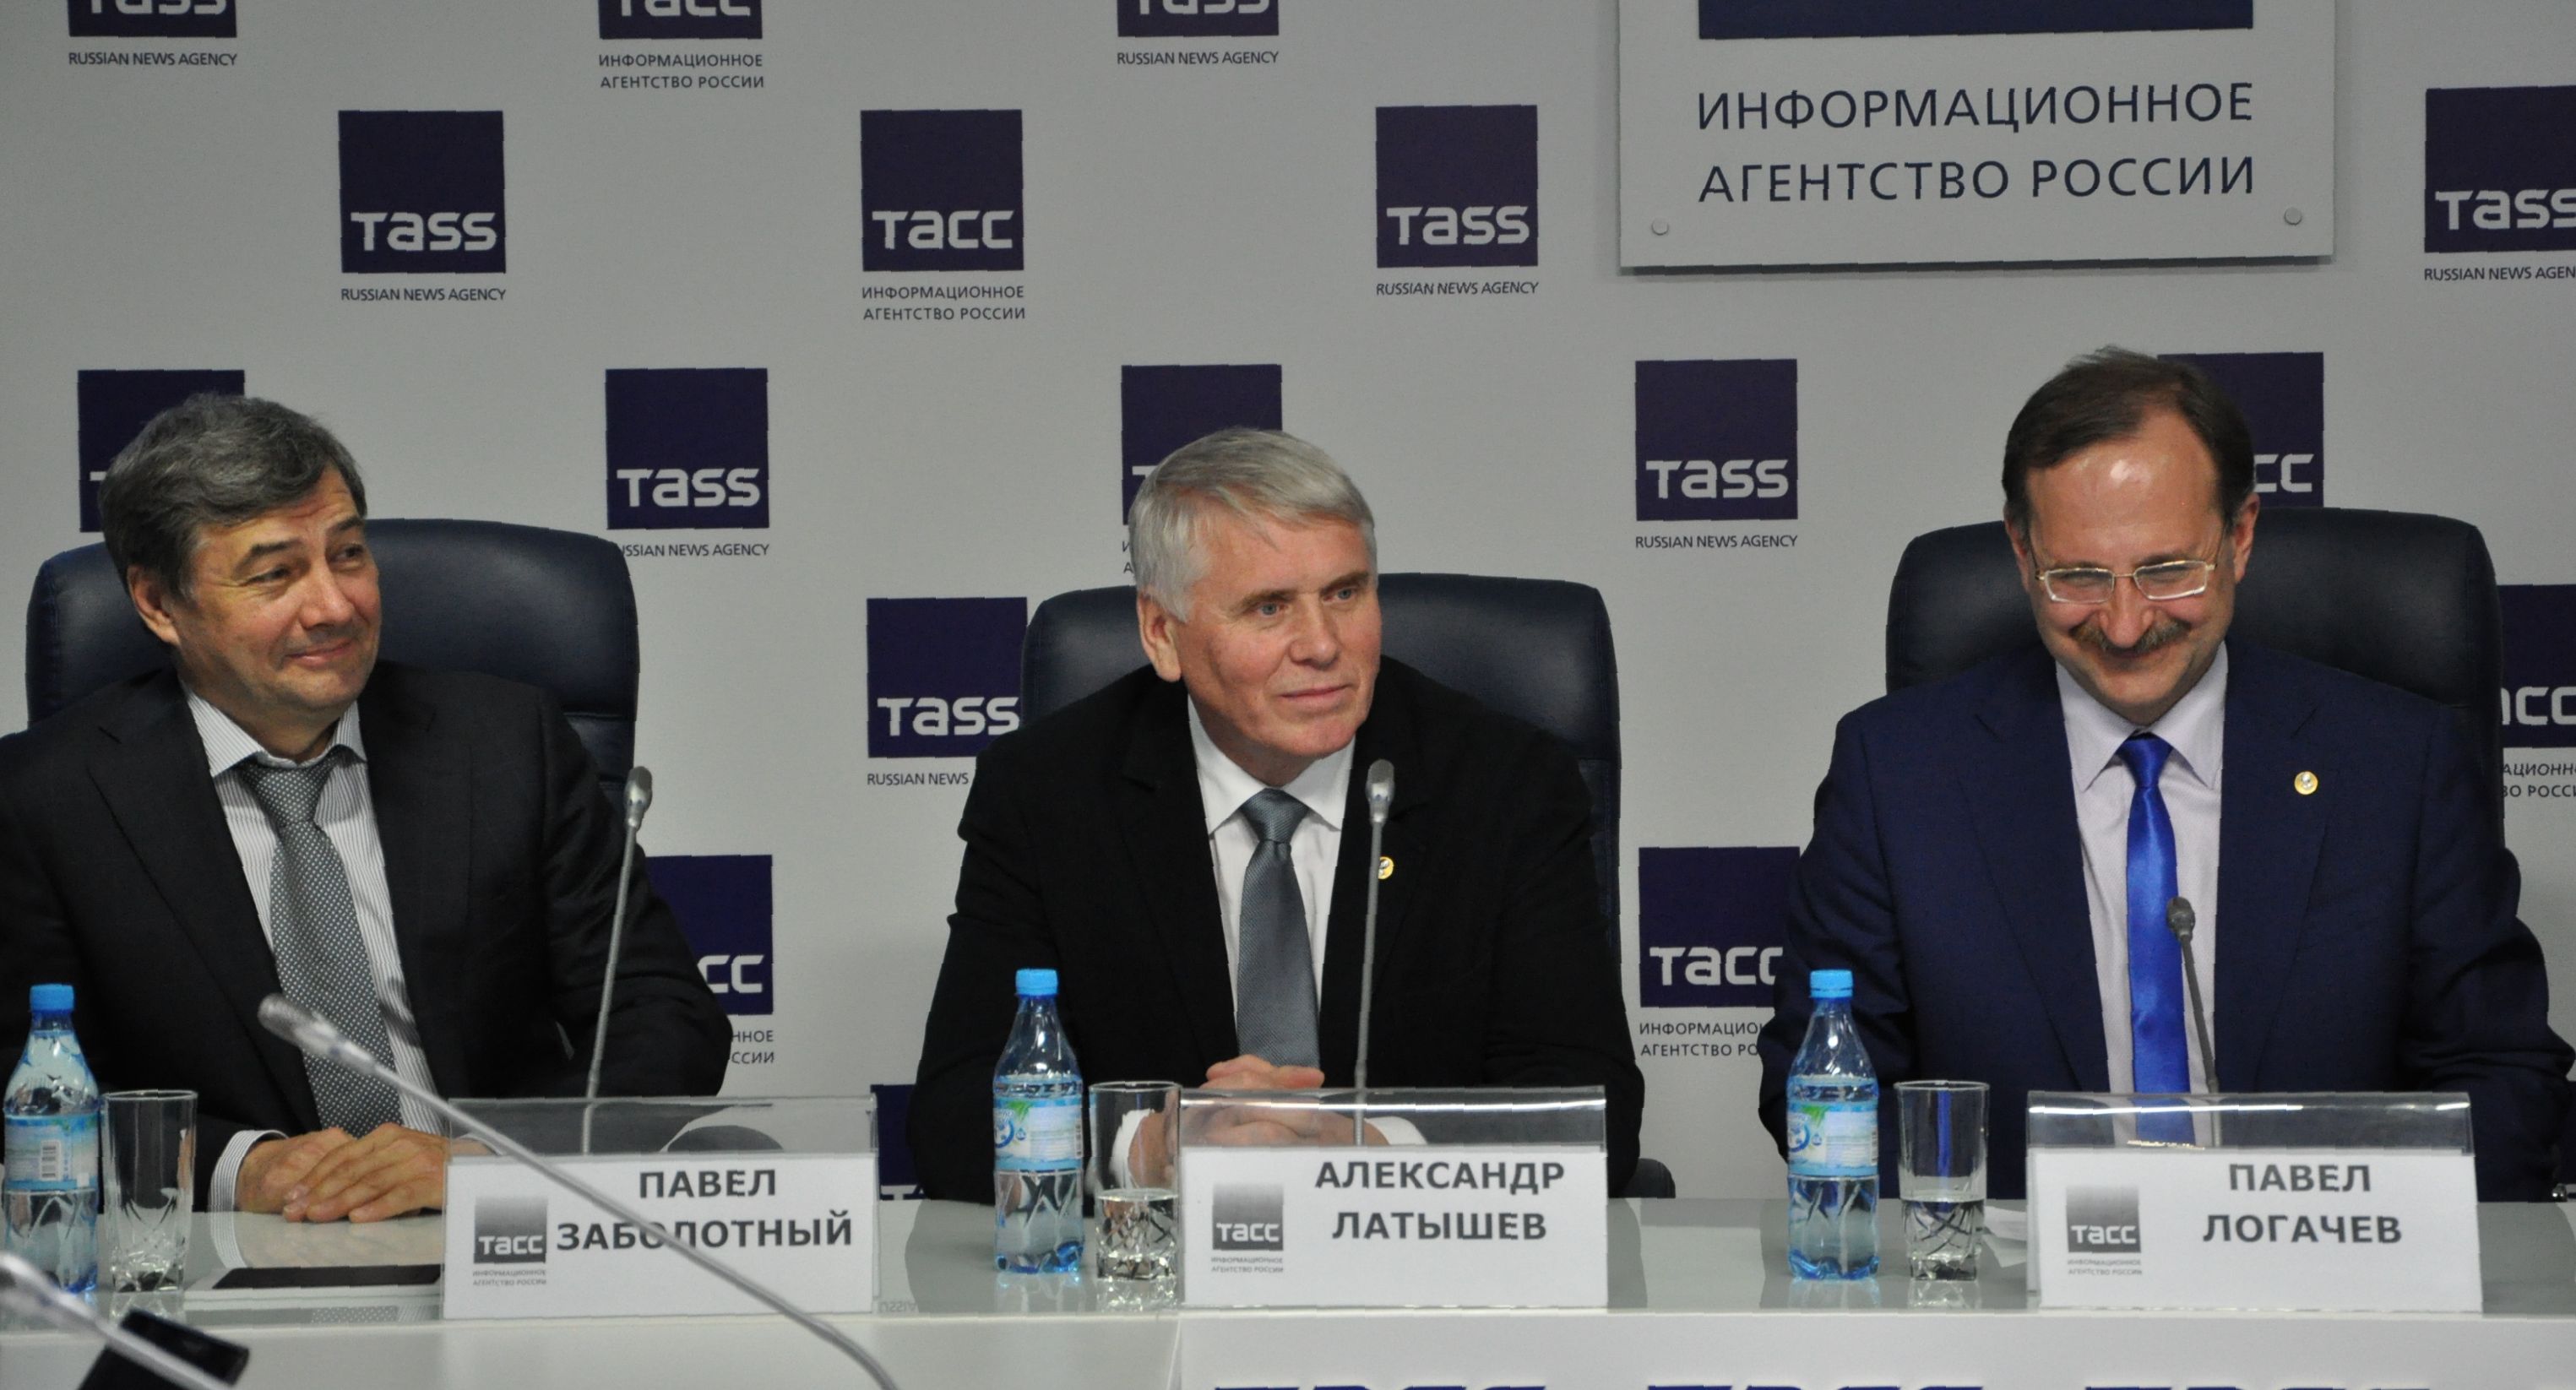 (слева направо) Павел Заболотный, Александр Латышев, Павел Логачев